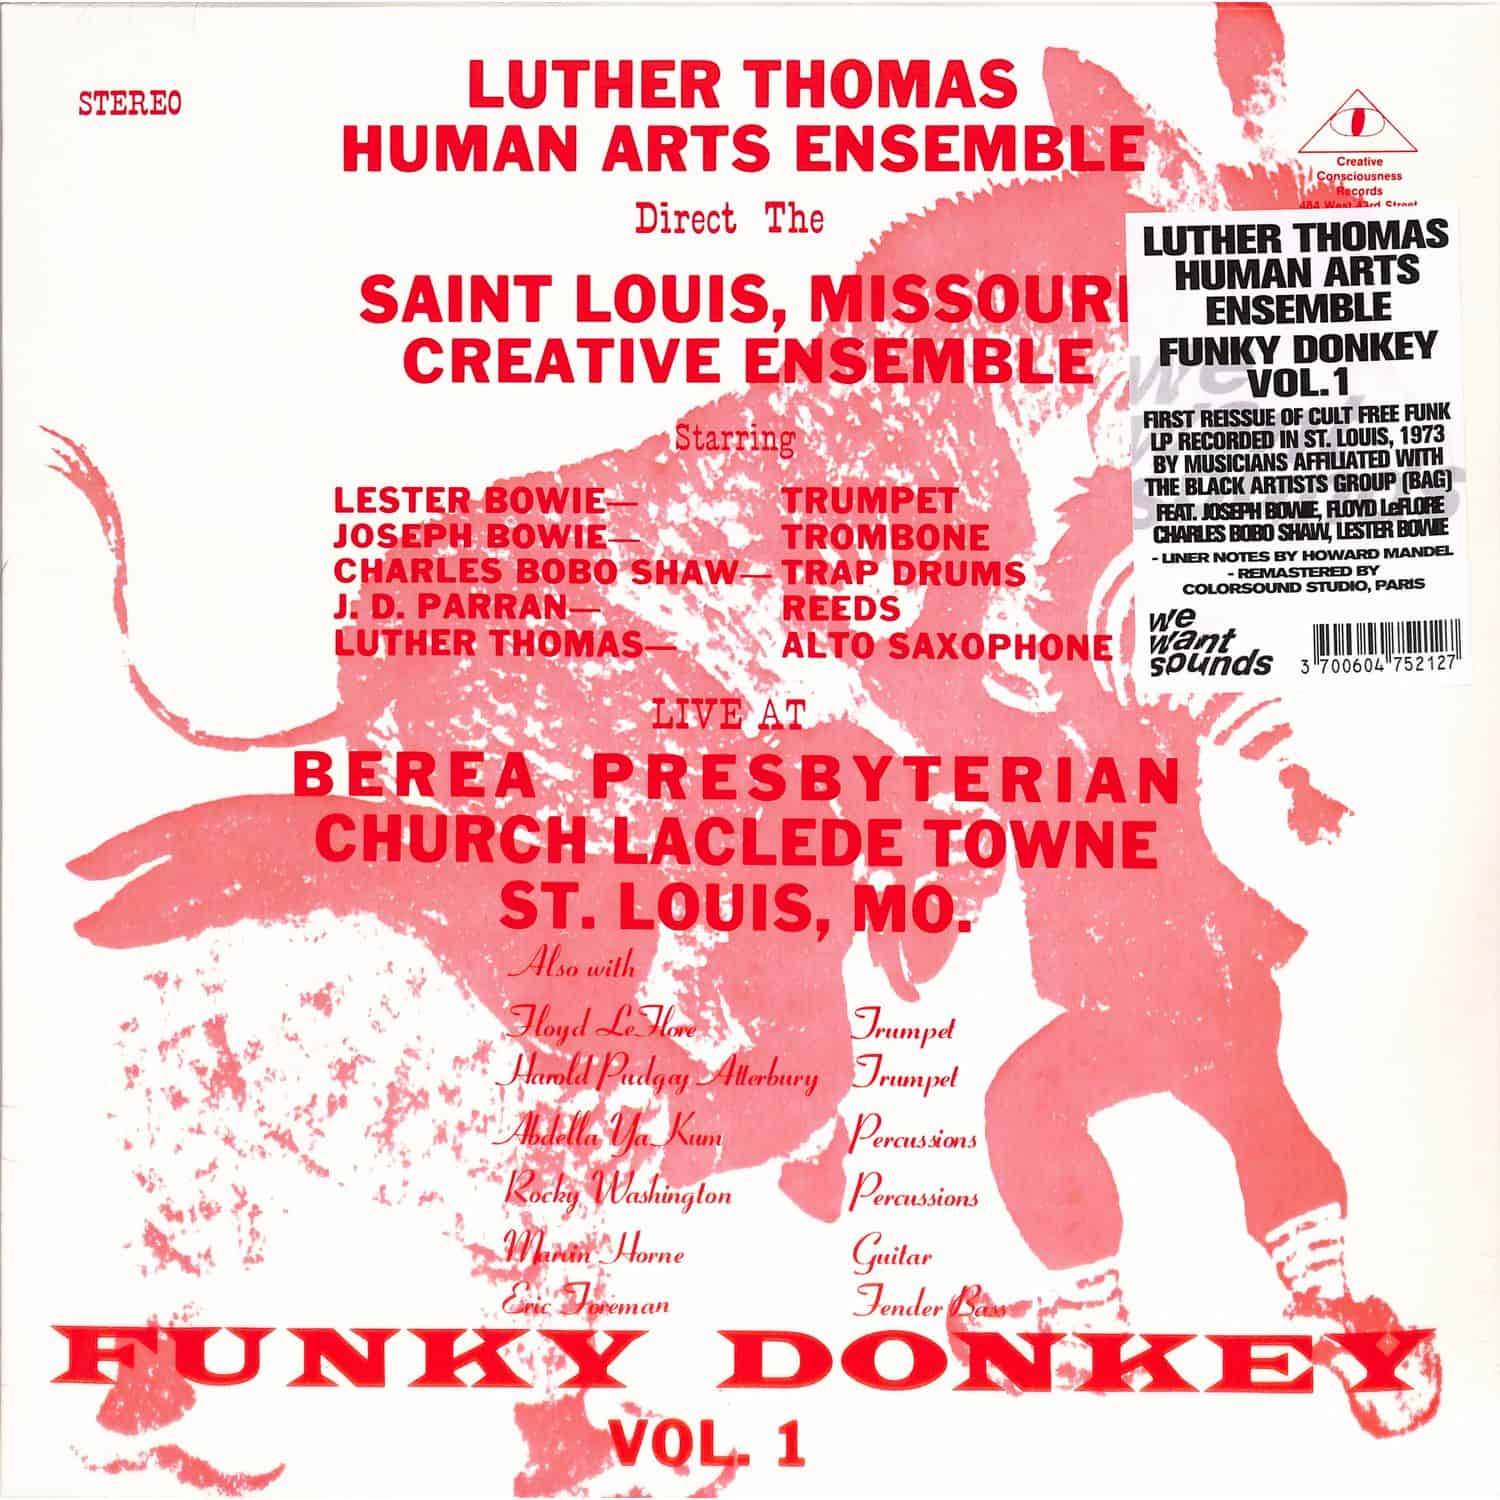 Luther Thomas Human Arts Ensemble - FUNKEY DONKEY VOL.1 